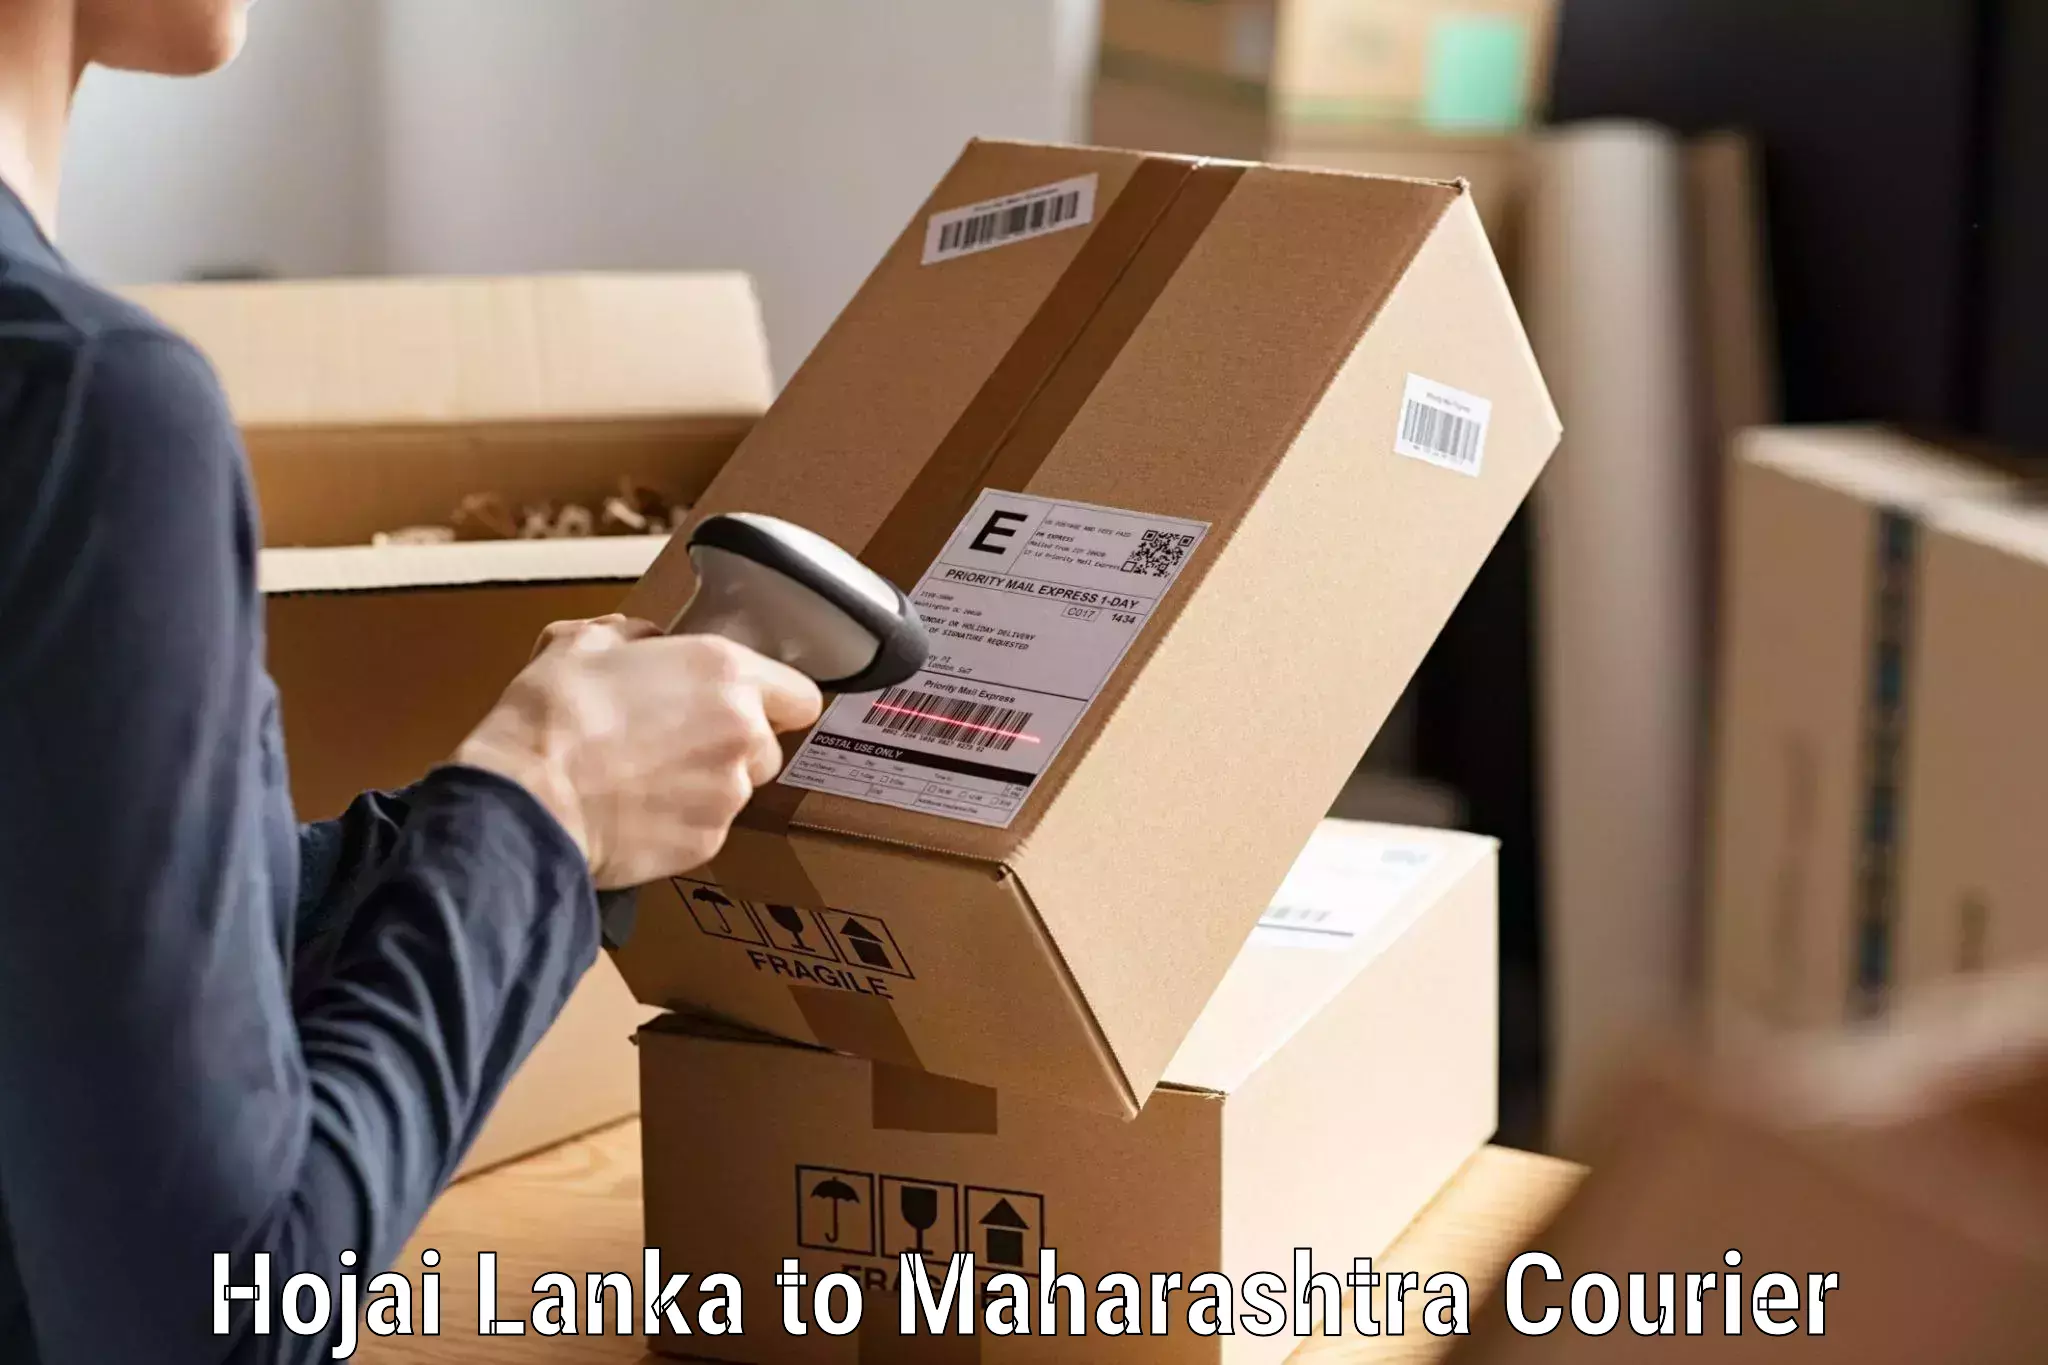 Express mail solutions Hojai Lanka to Mumbai Port